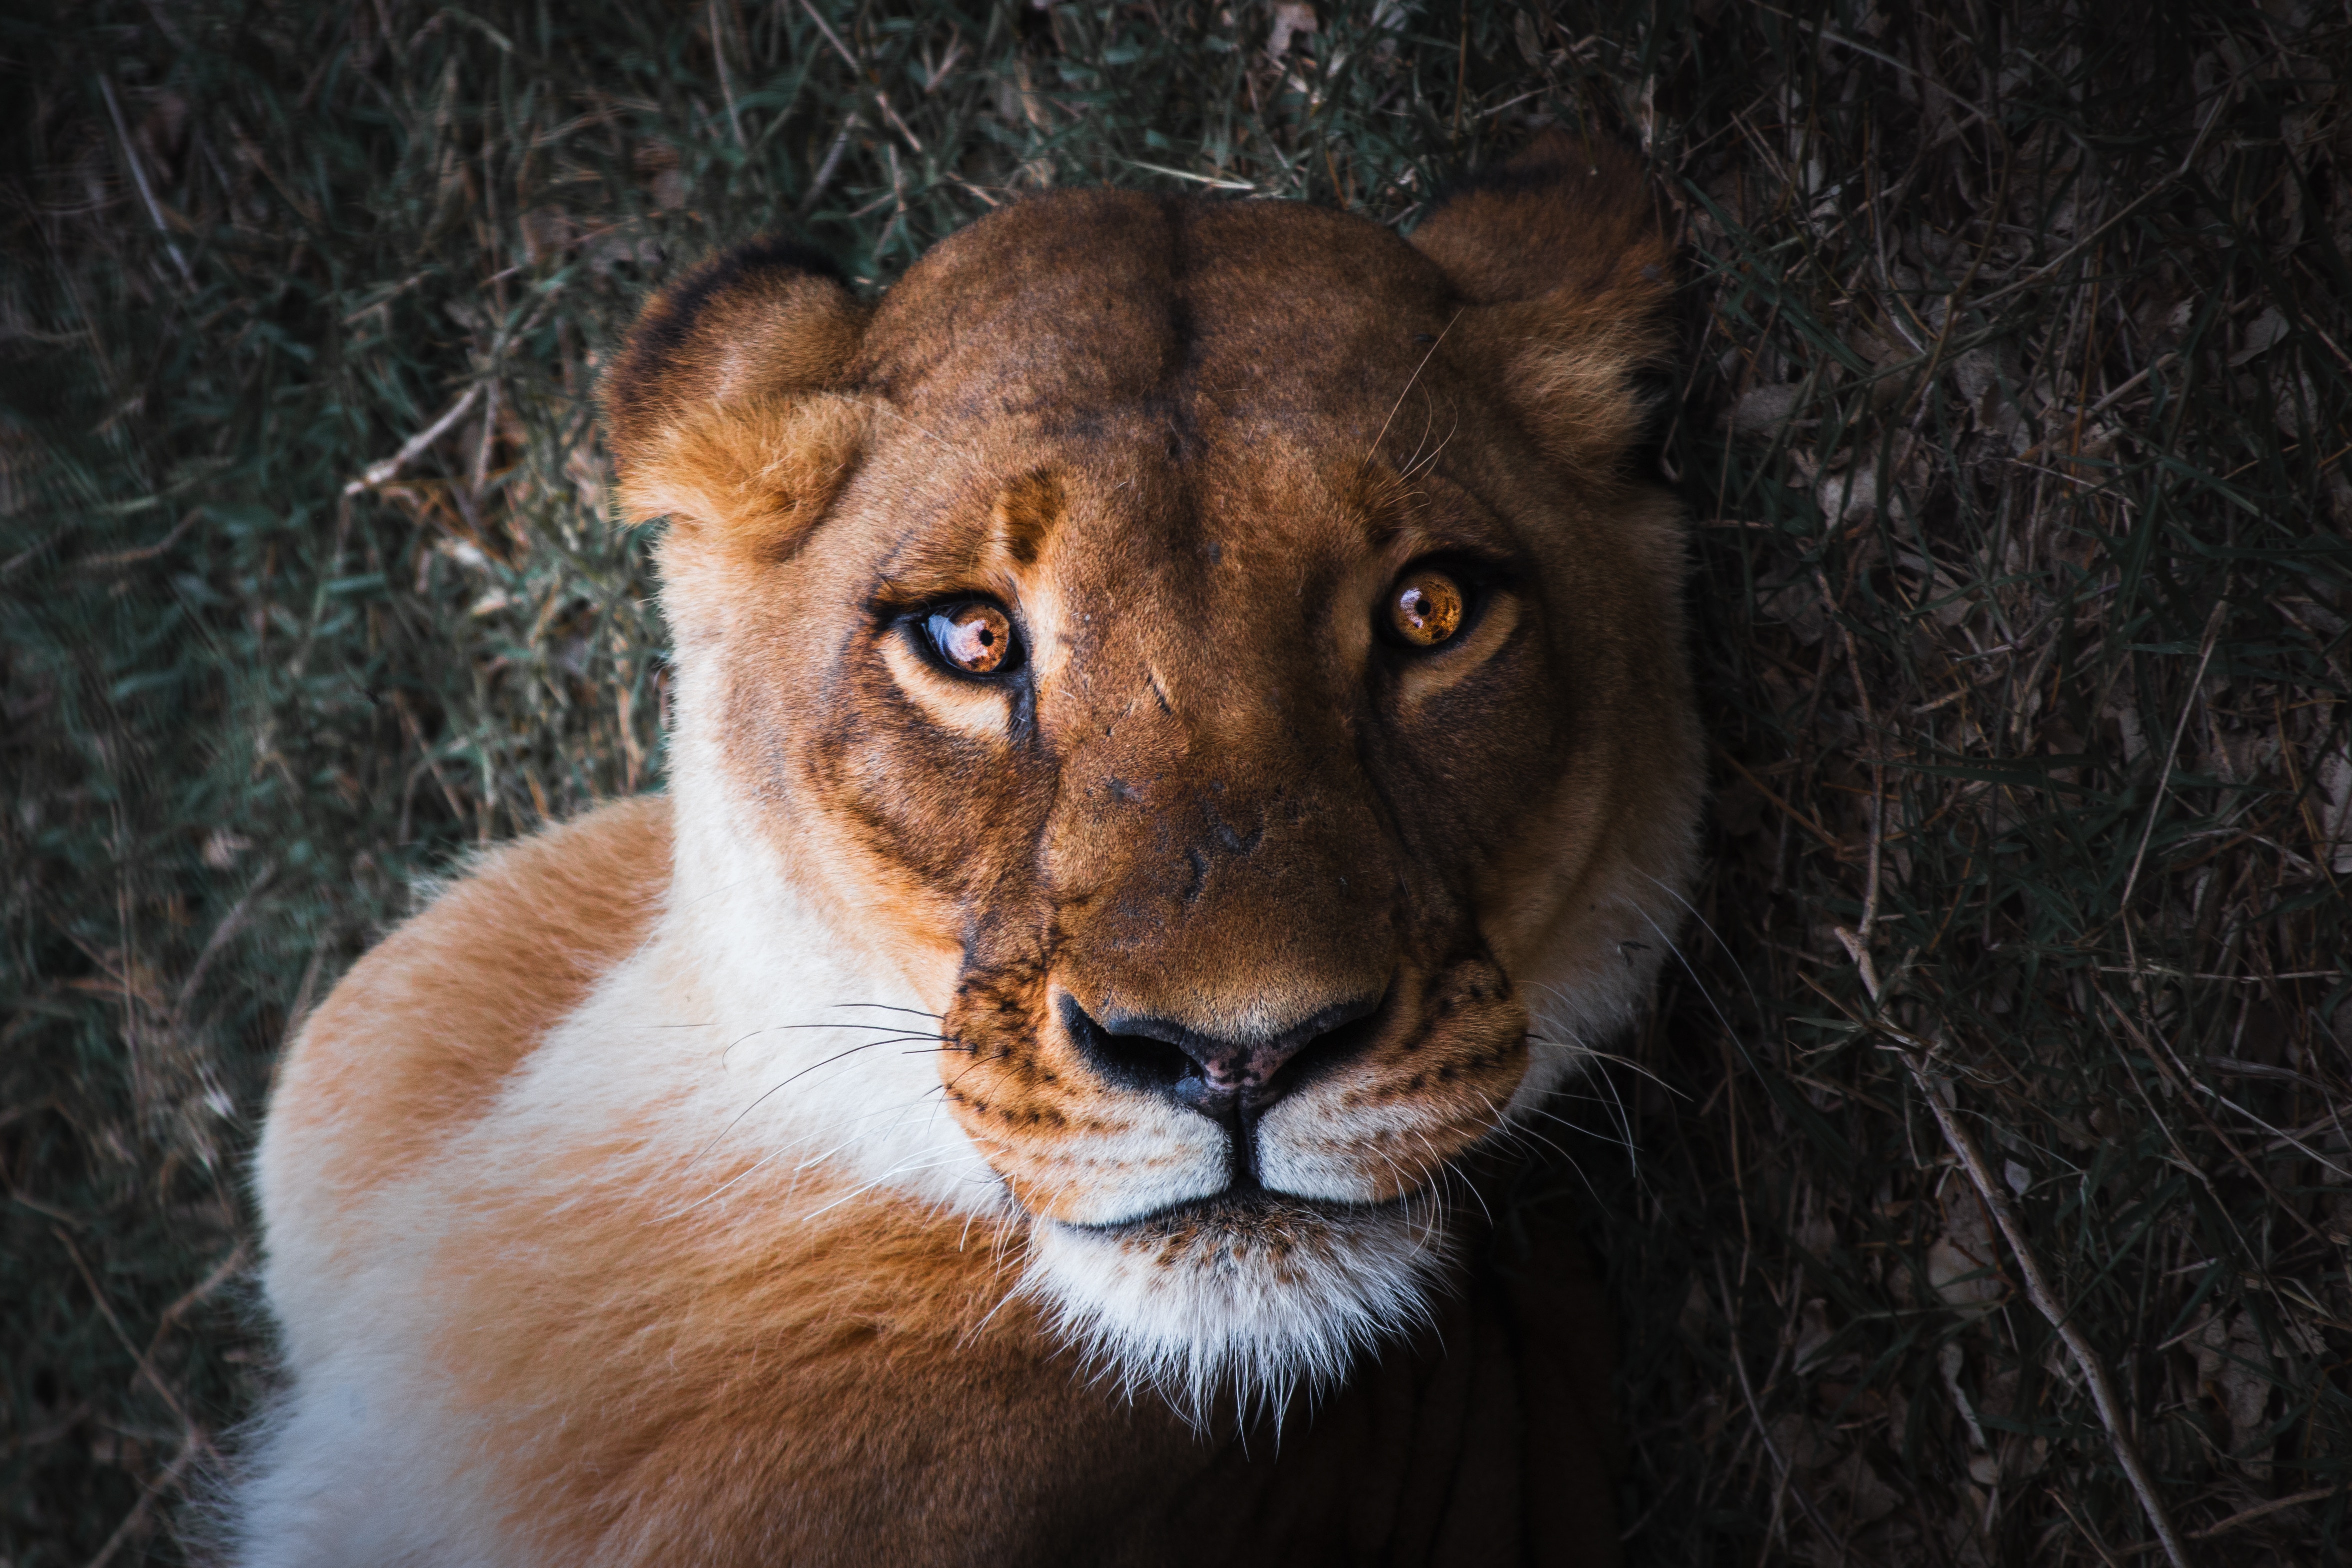 123368 descargar imagen animales, bozal, un leon, león, depredador, visión, opinión, leona, encantador, glamuroso: fondos de pantalla y protectores de pantalla gratis